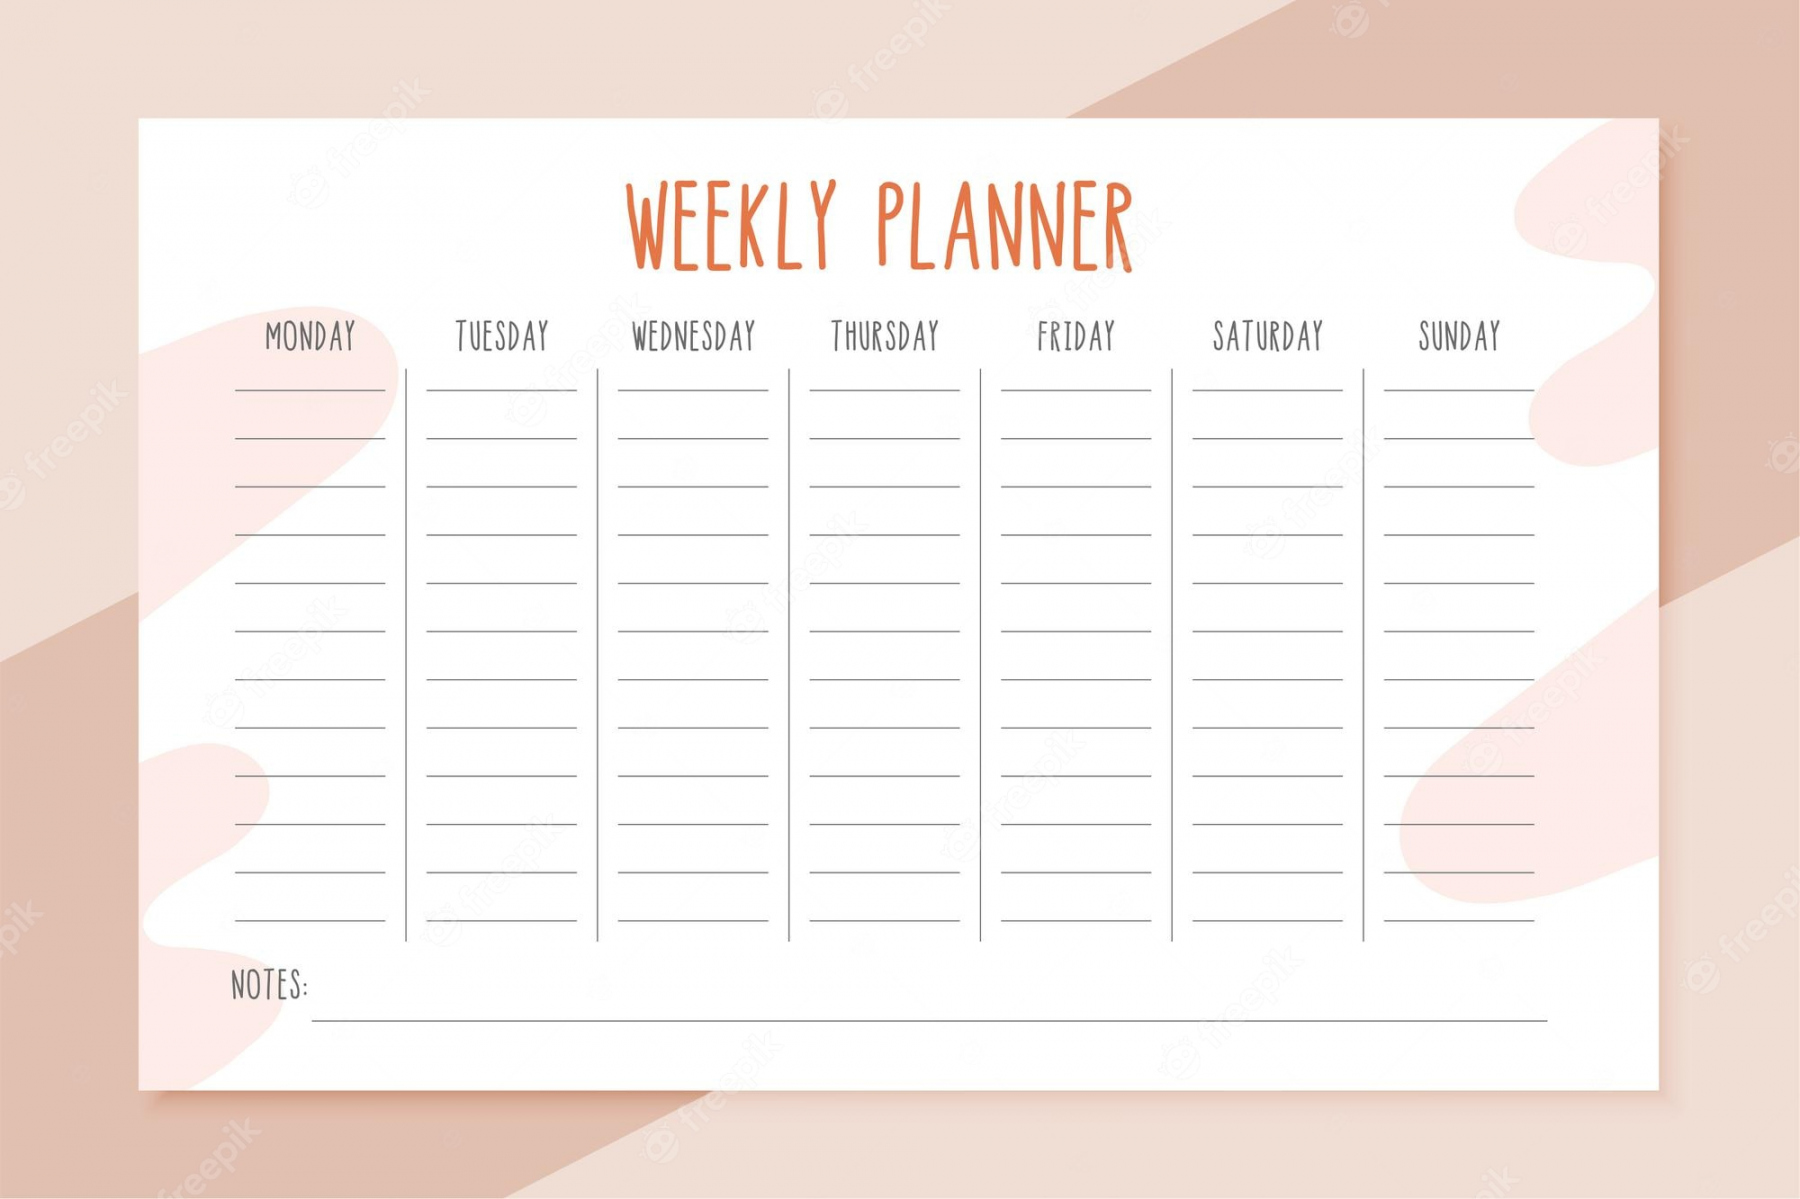 Free Printable Weekly Planners - Printable - Weekly Planner Template - Free Vectors & PSDs to Download